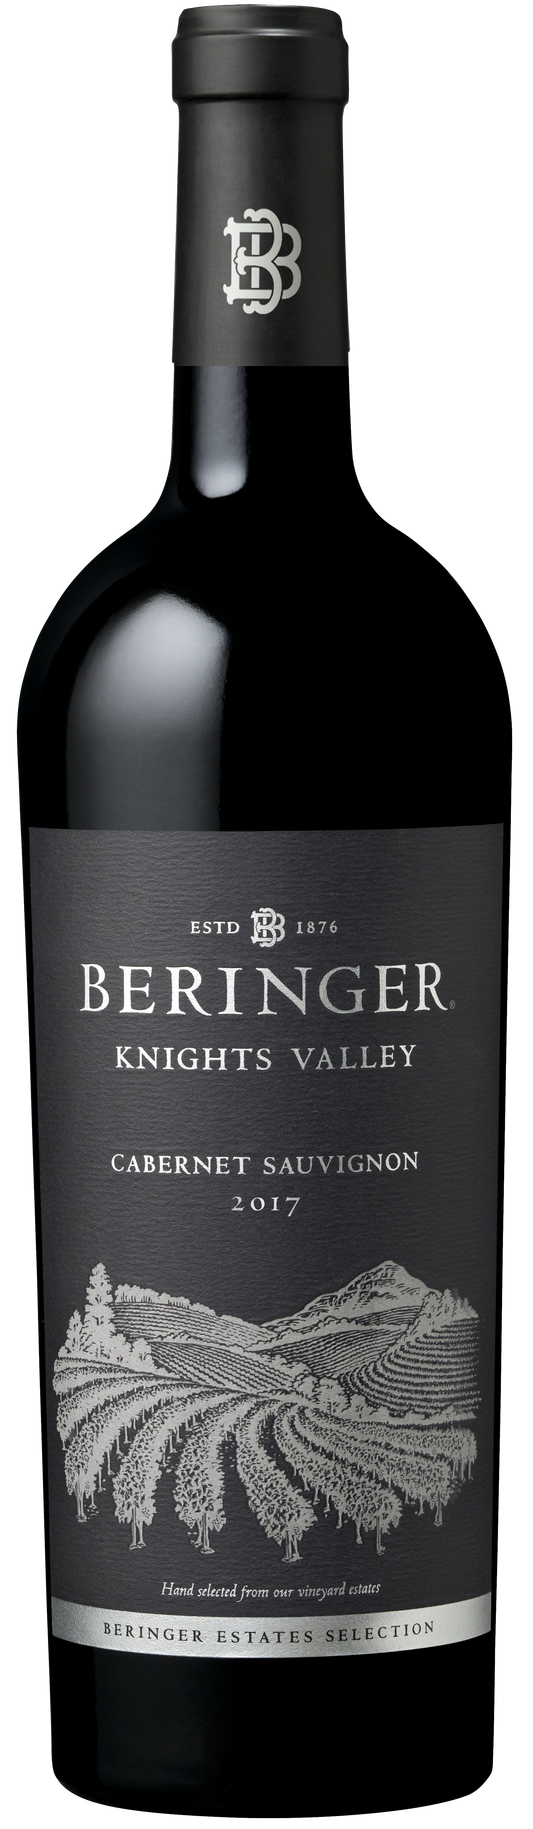 Beringer Knights Valley Cabernet Sauvignon 2017